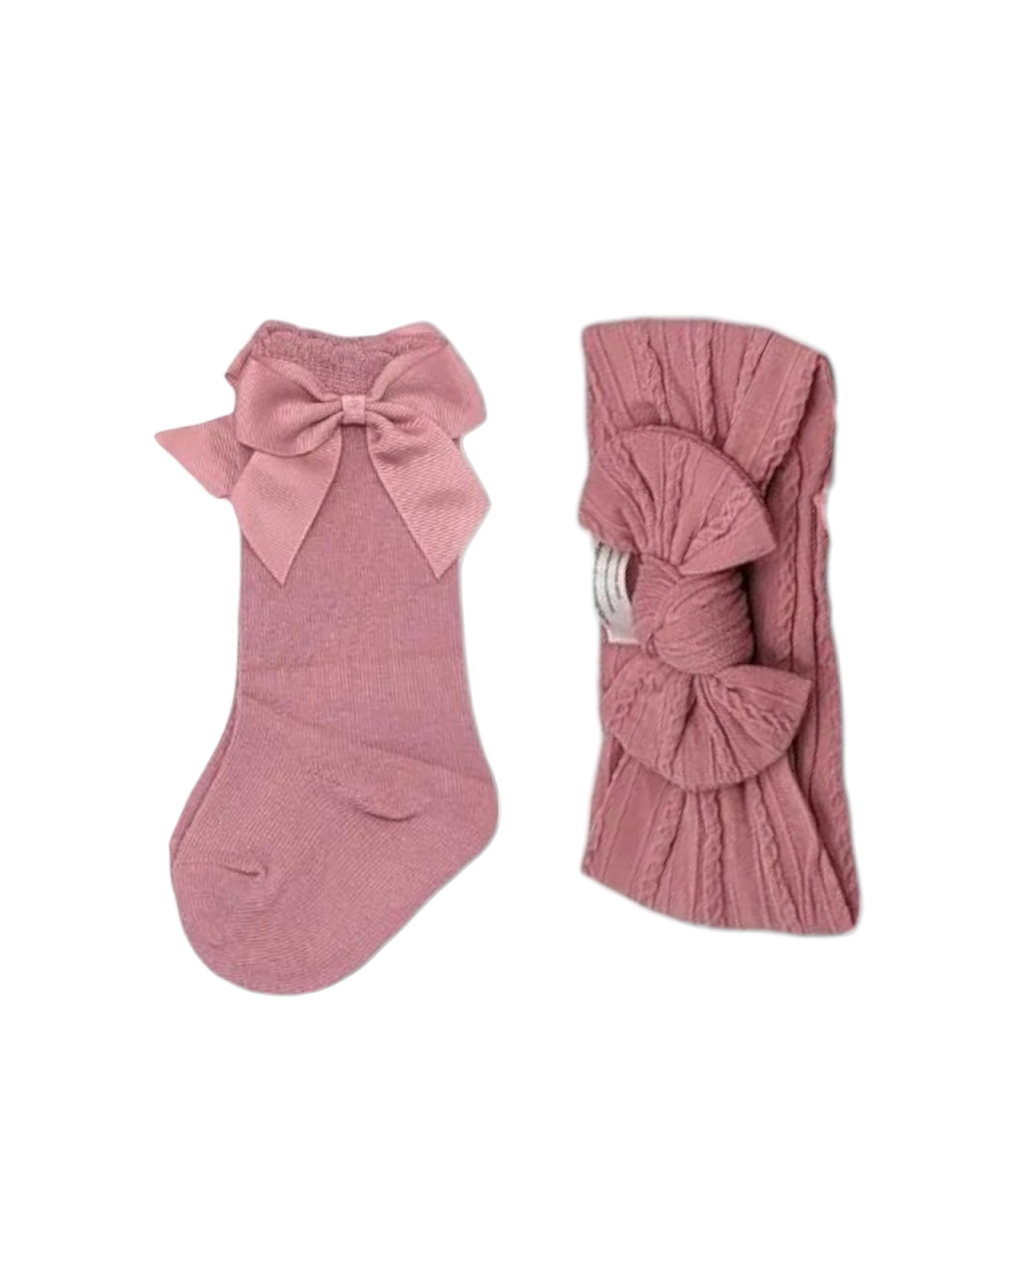 Our Light Berry Smaller Headwrap & Knee High Socks Set - Betty Brown Boutique Ltd